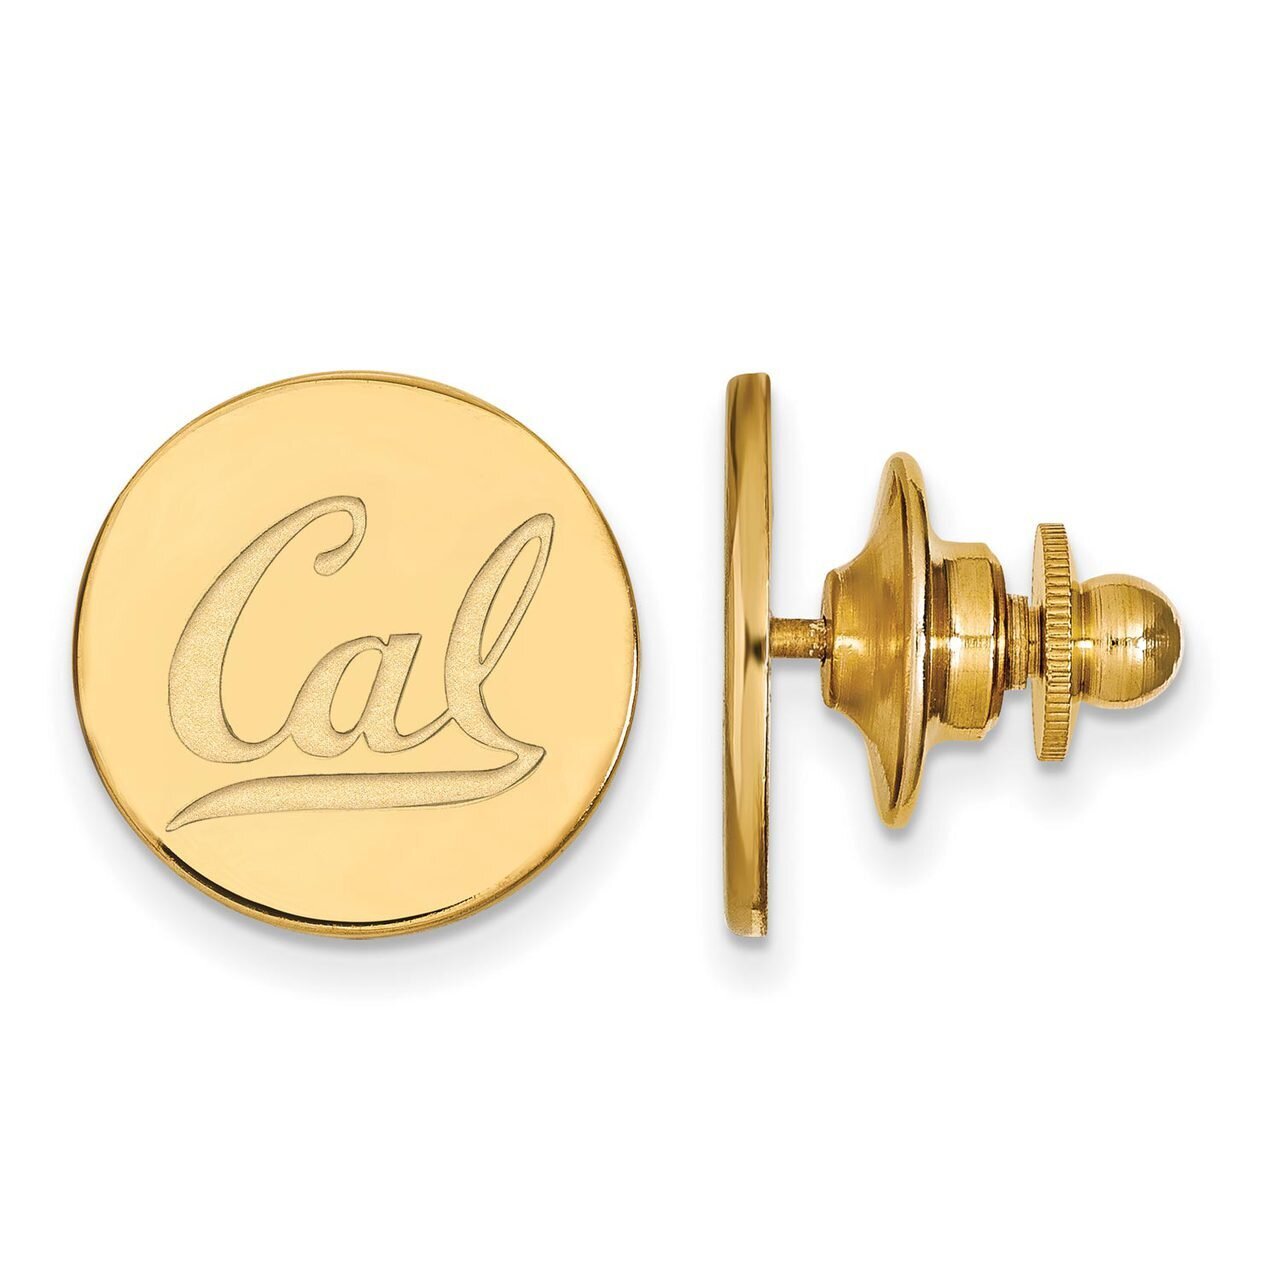 University of California Berkeley Lapel Pin Gold-plated Silver GP009UCB